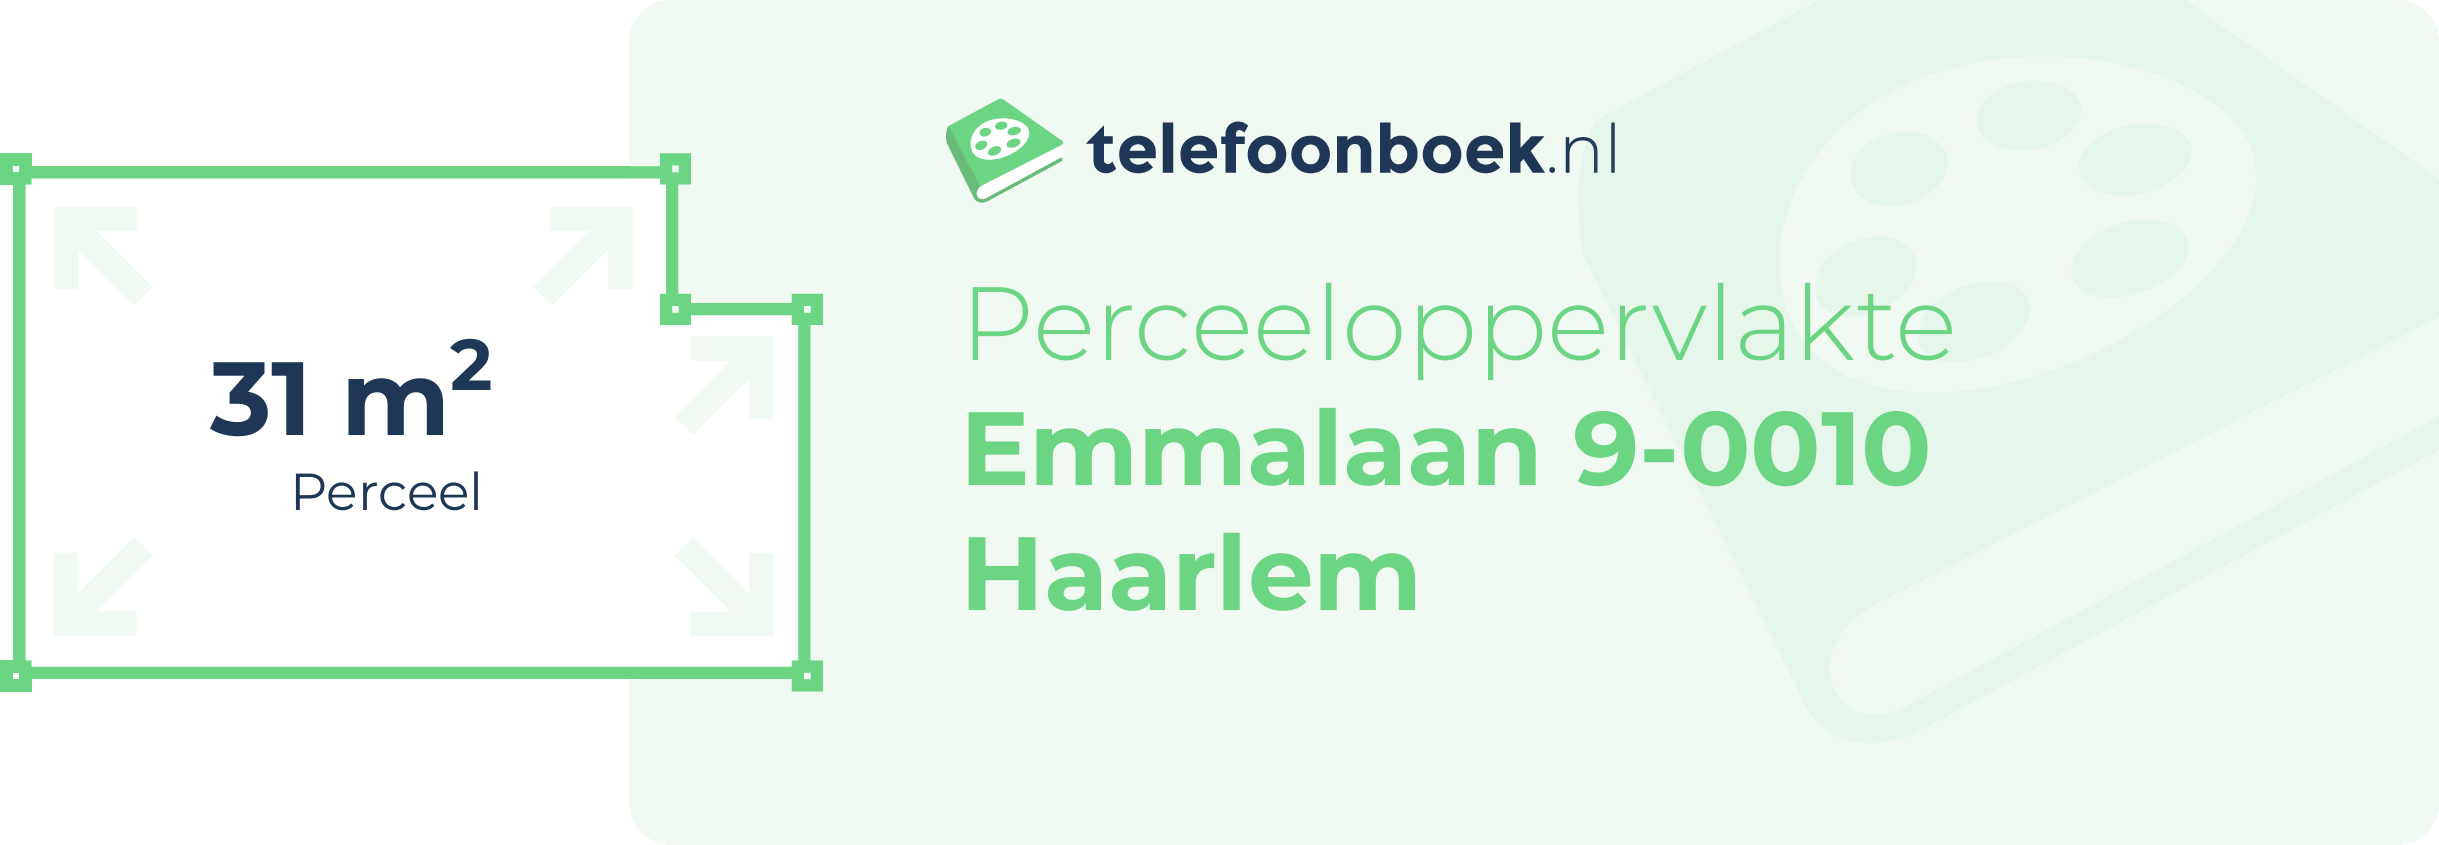 Perceeloppervlakte Emmalaan 9-0010 Haarlem